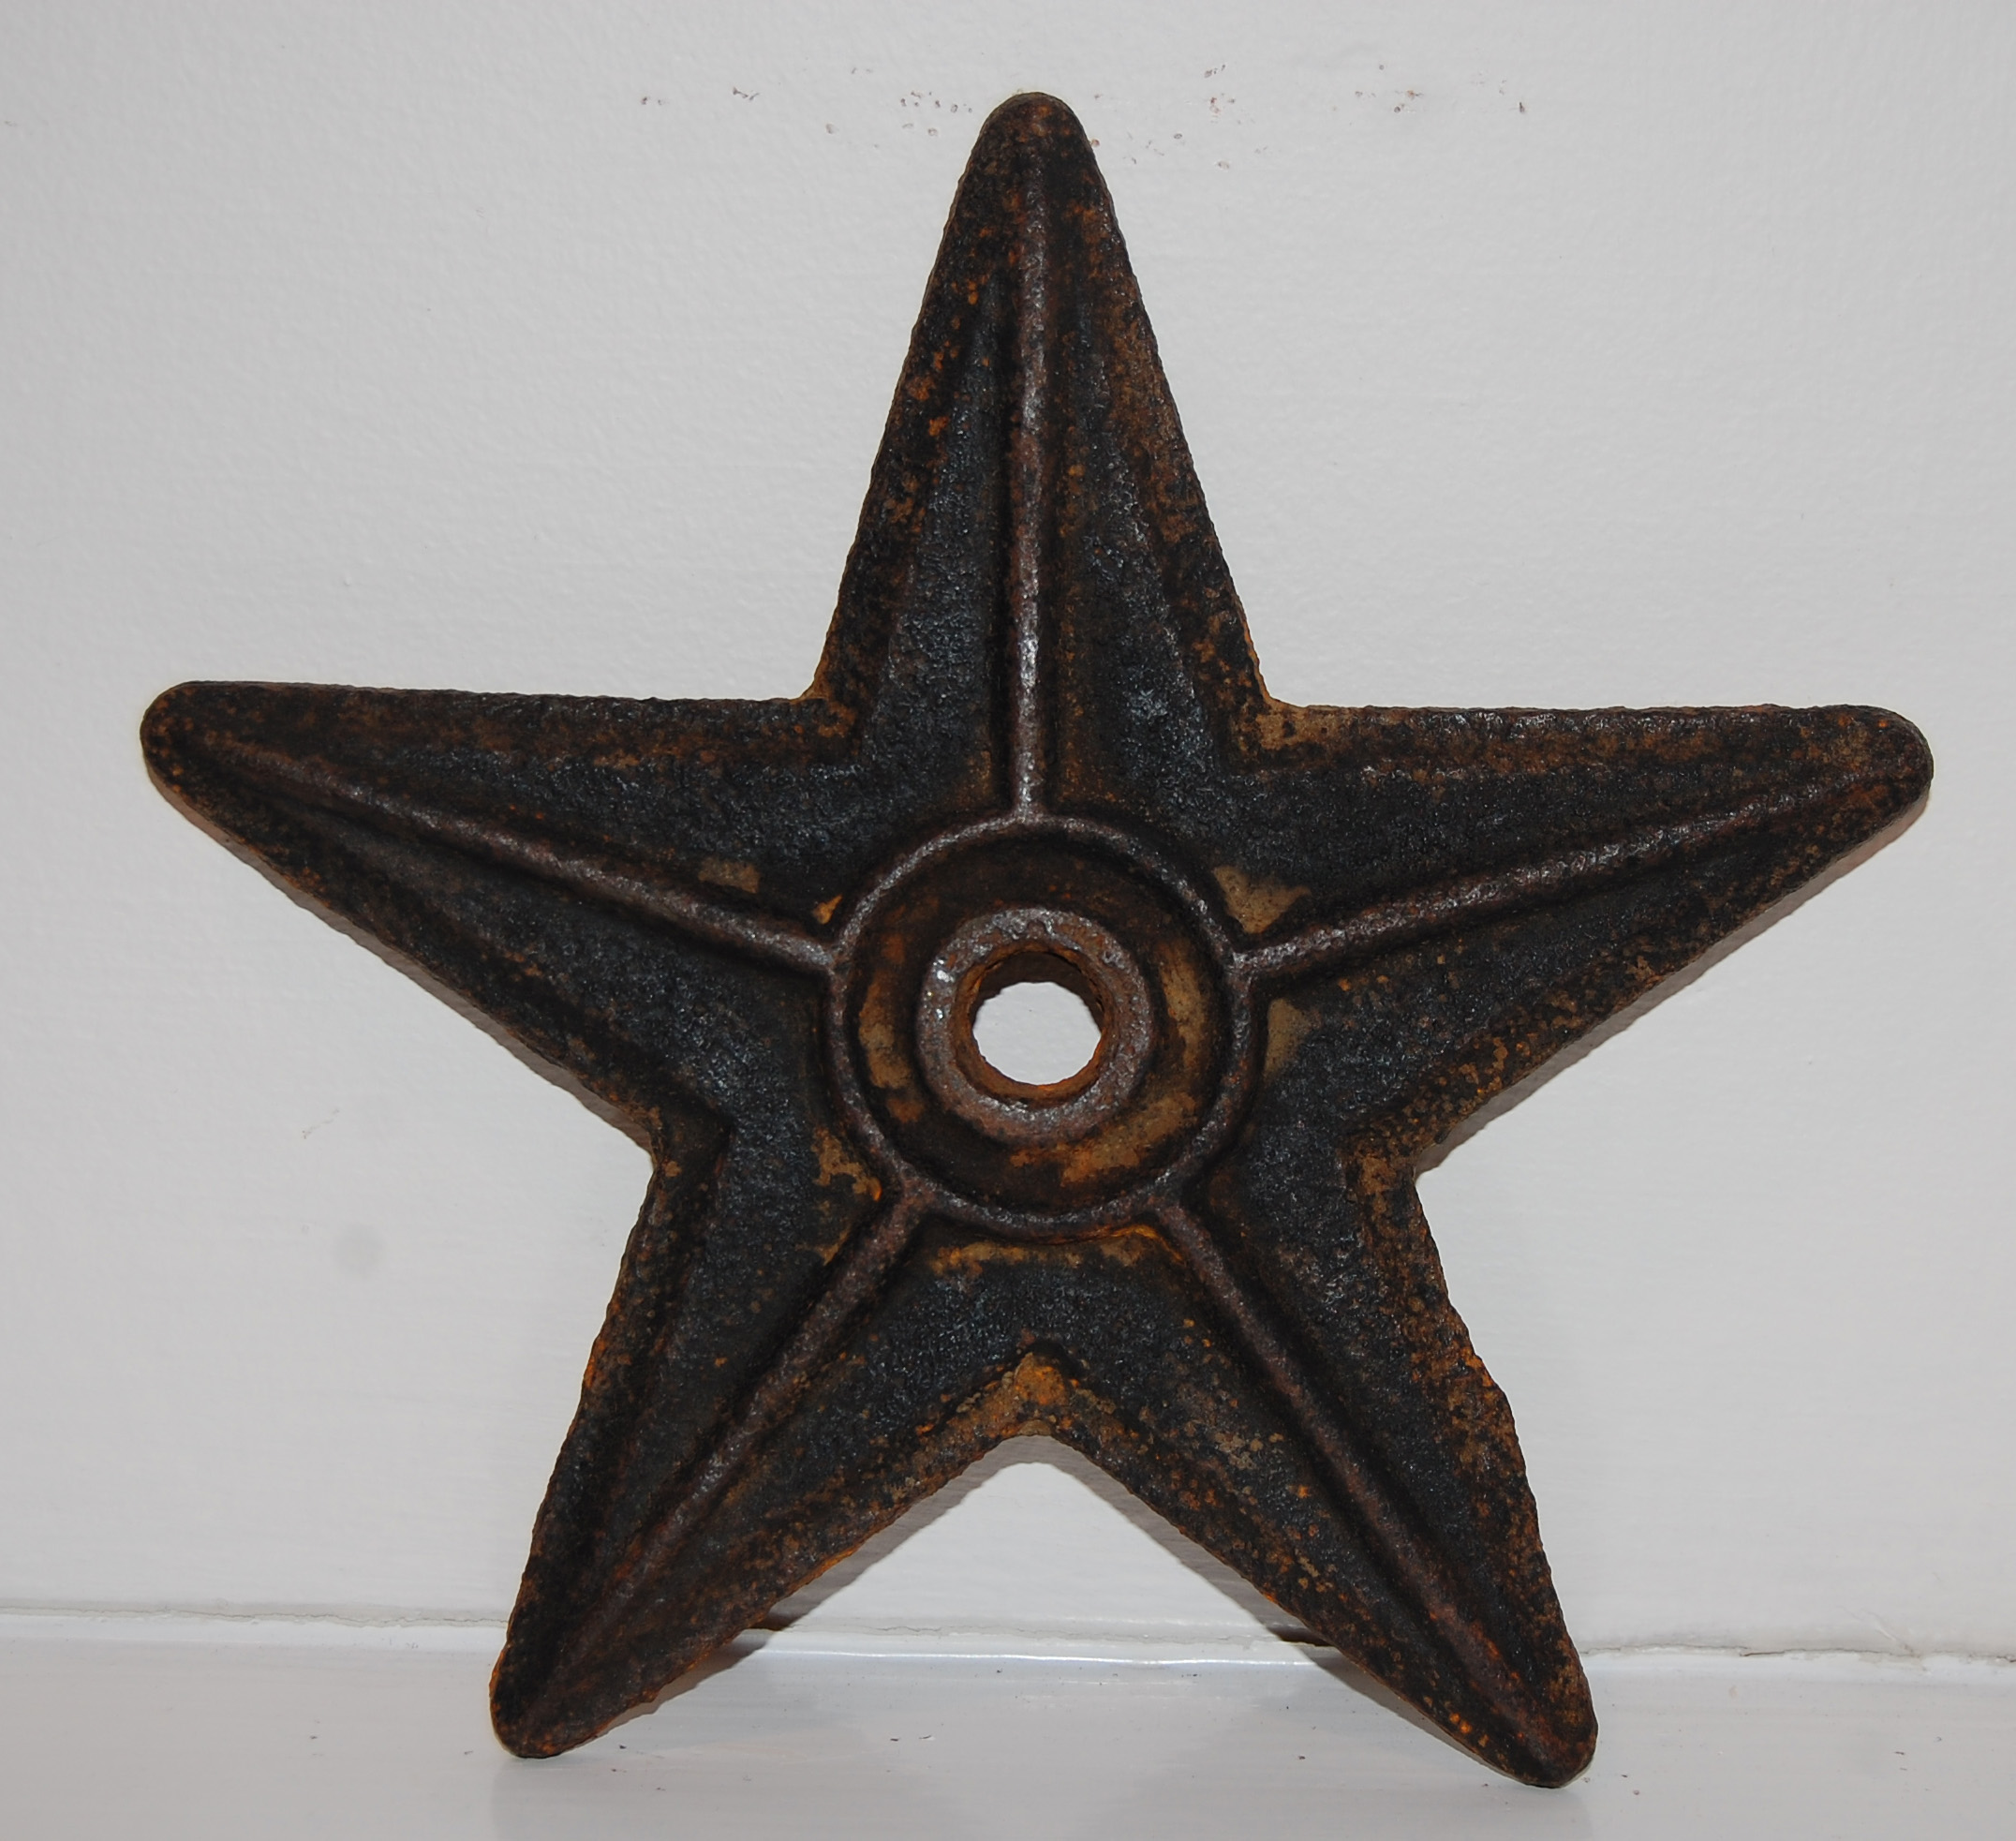 Barnstar anchor plate